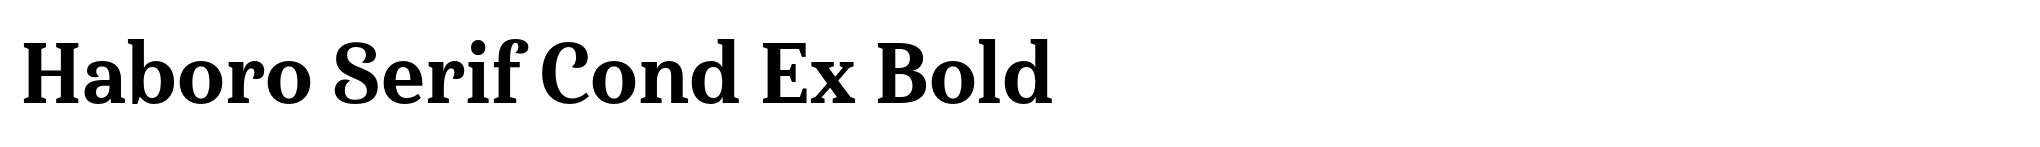 Haboro Serif Cond Ex Bold image